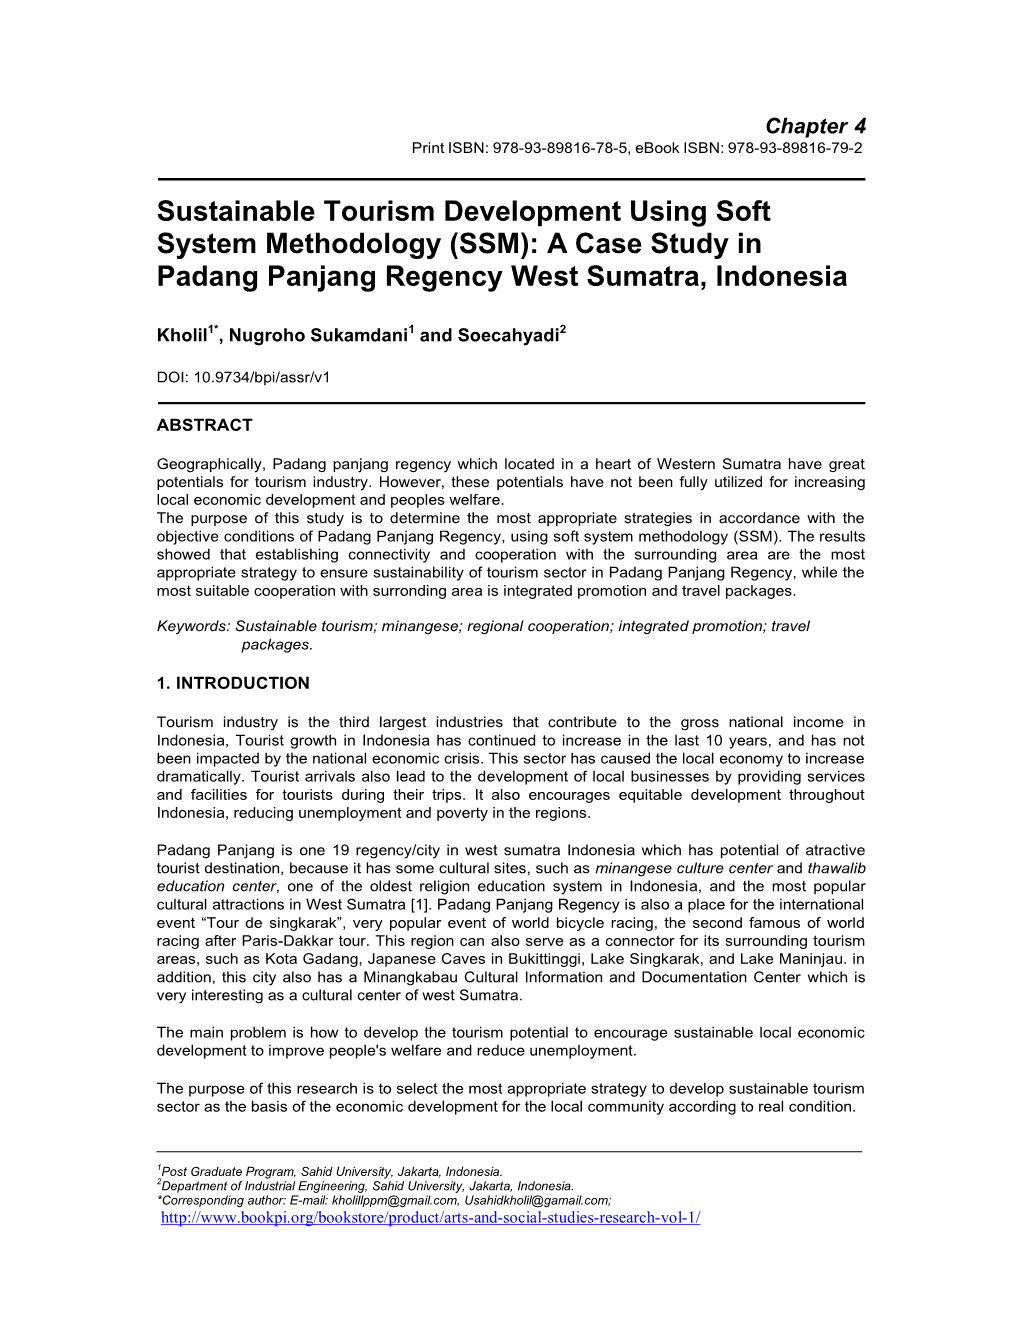 Sustainable Tourism Development Using Soft System Methodology (SSM): a Case Study in Padang Panjang Regency West Sumatra, Indonesia